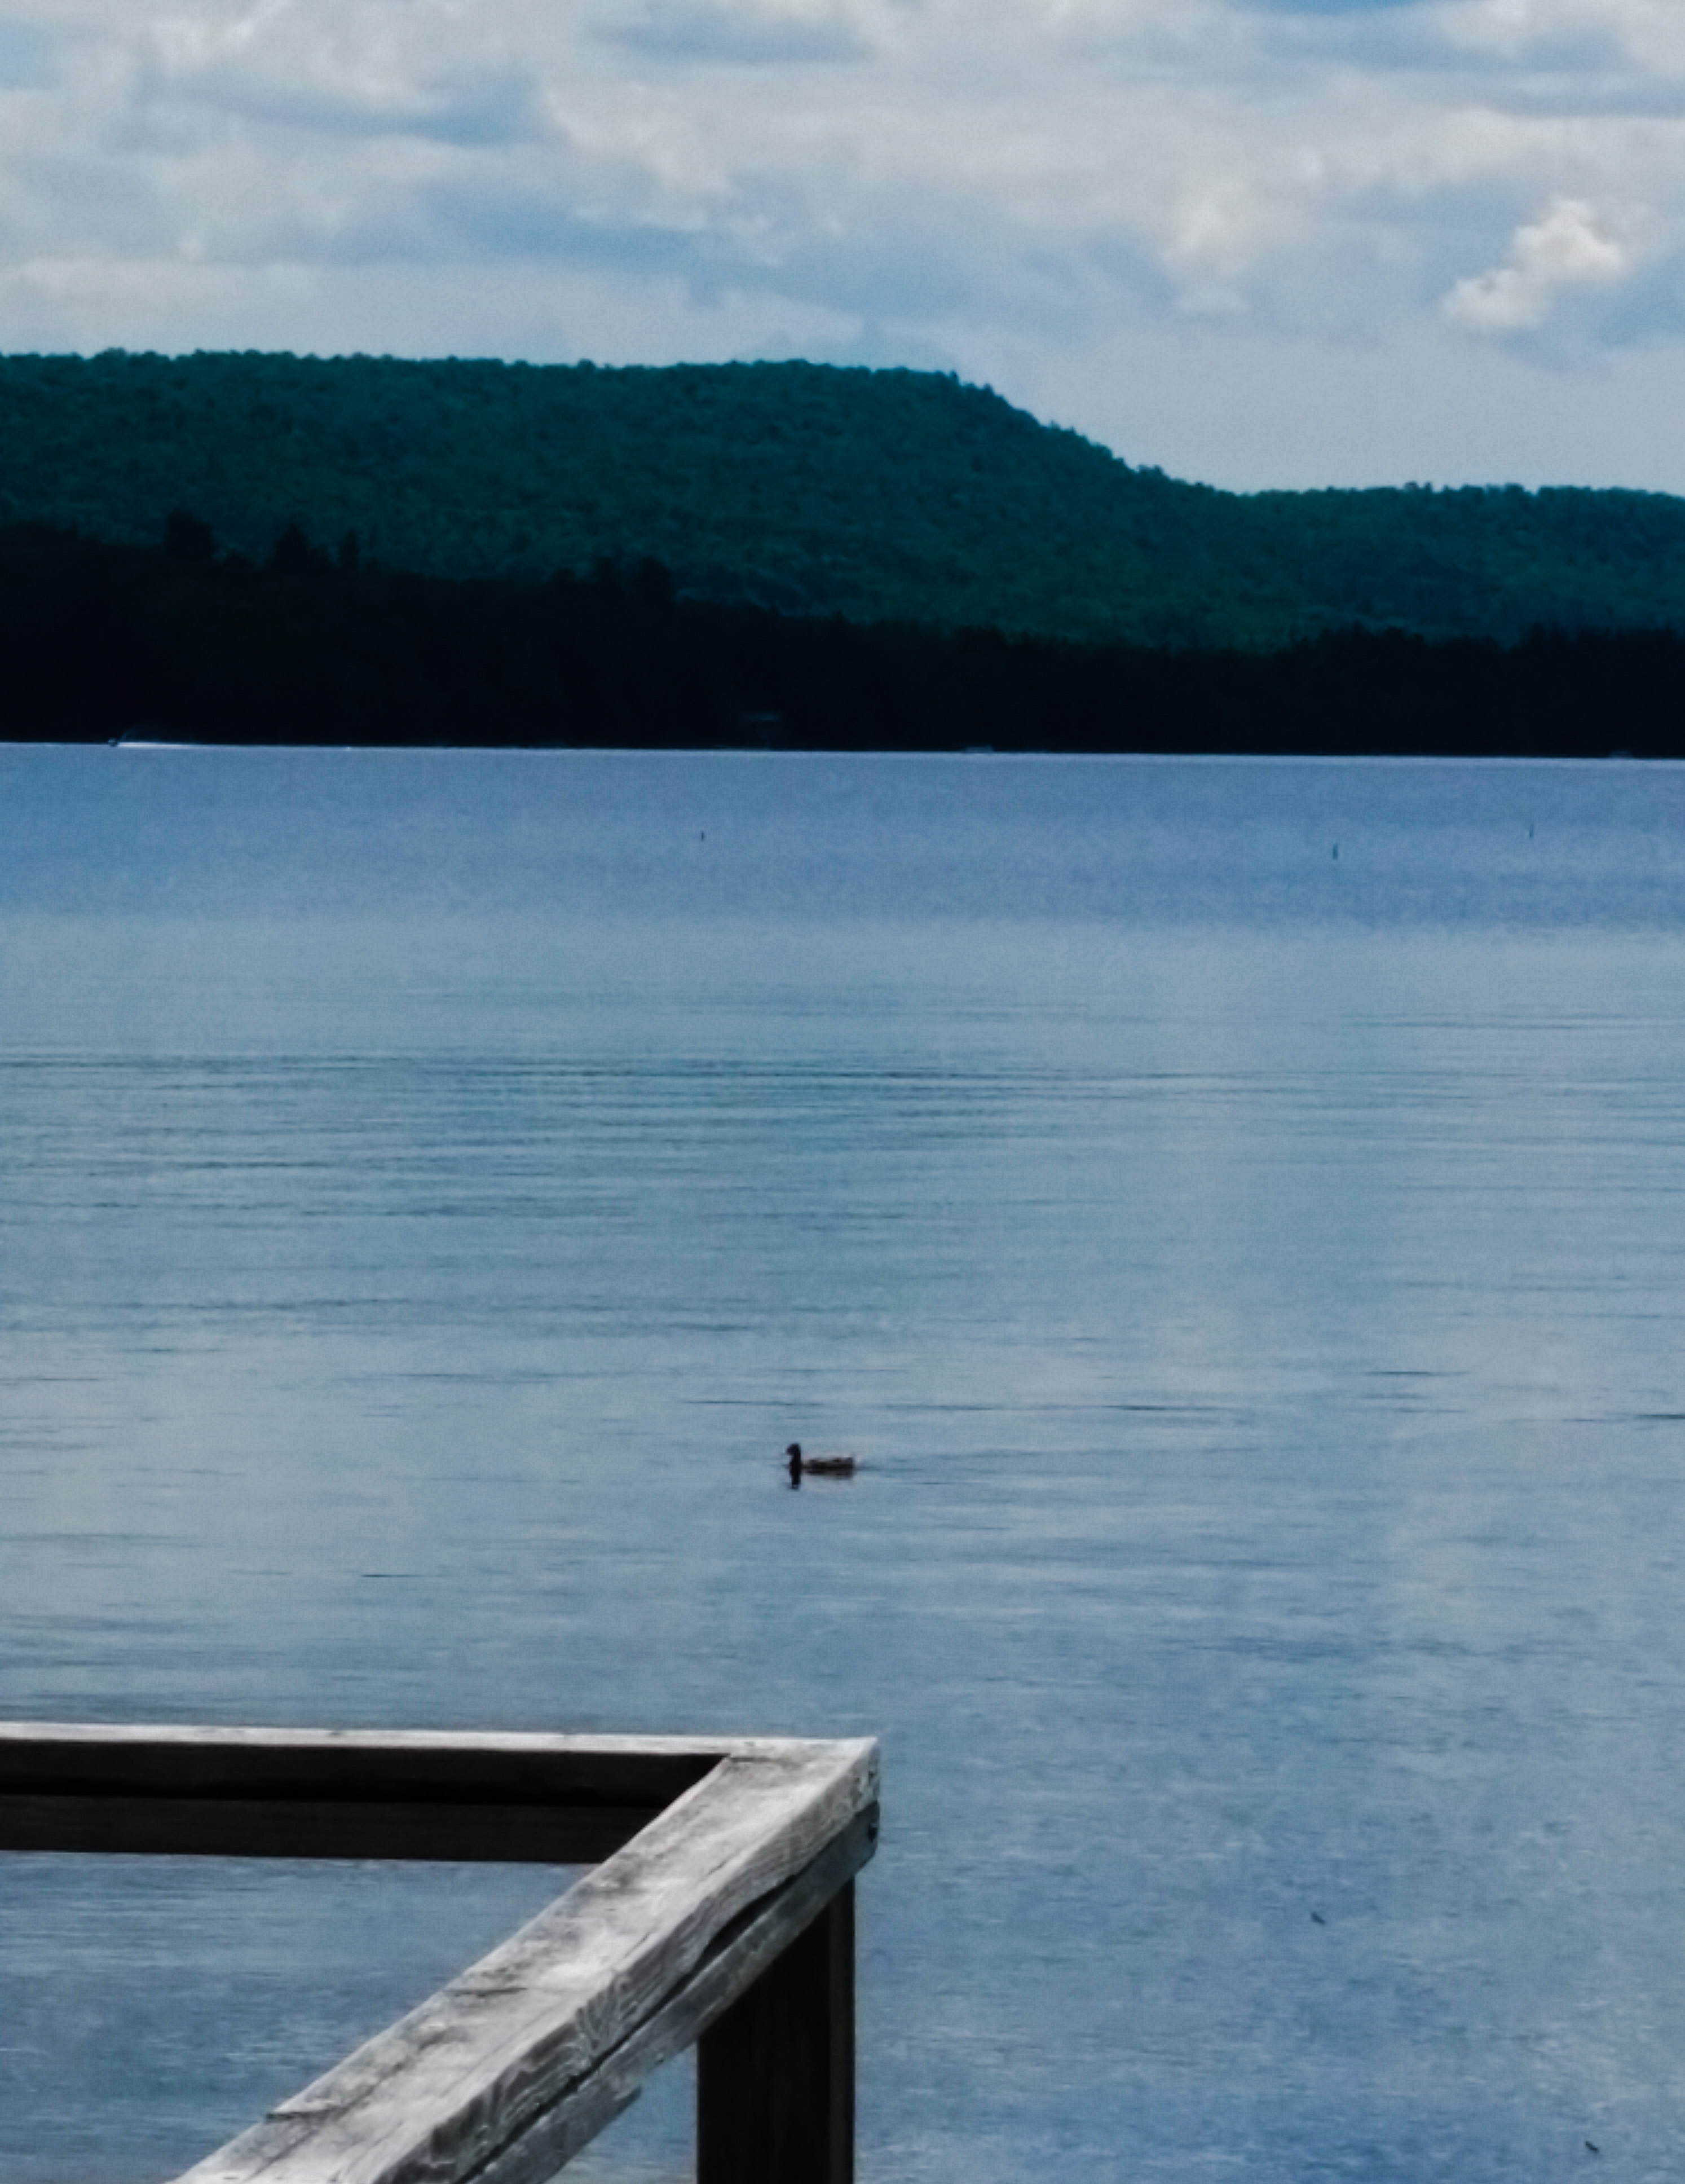 Sunday Sabbath: The Duck in the Lake